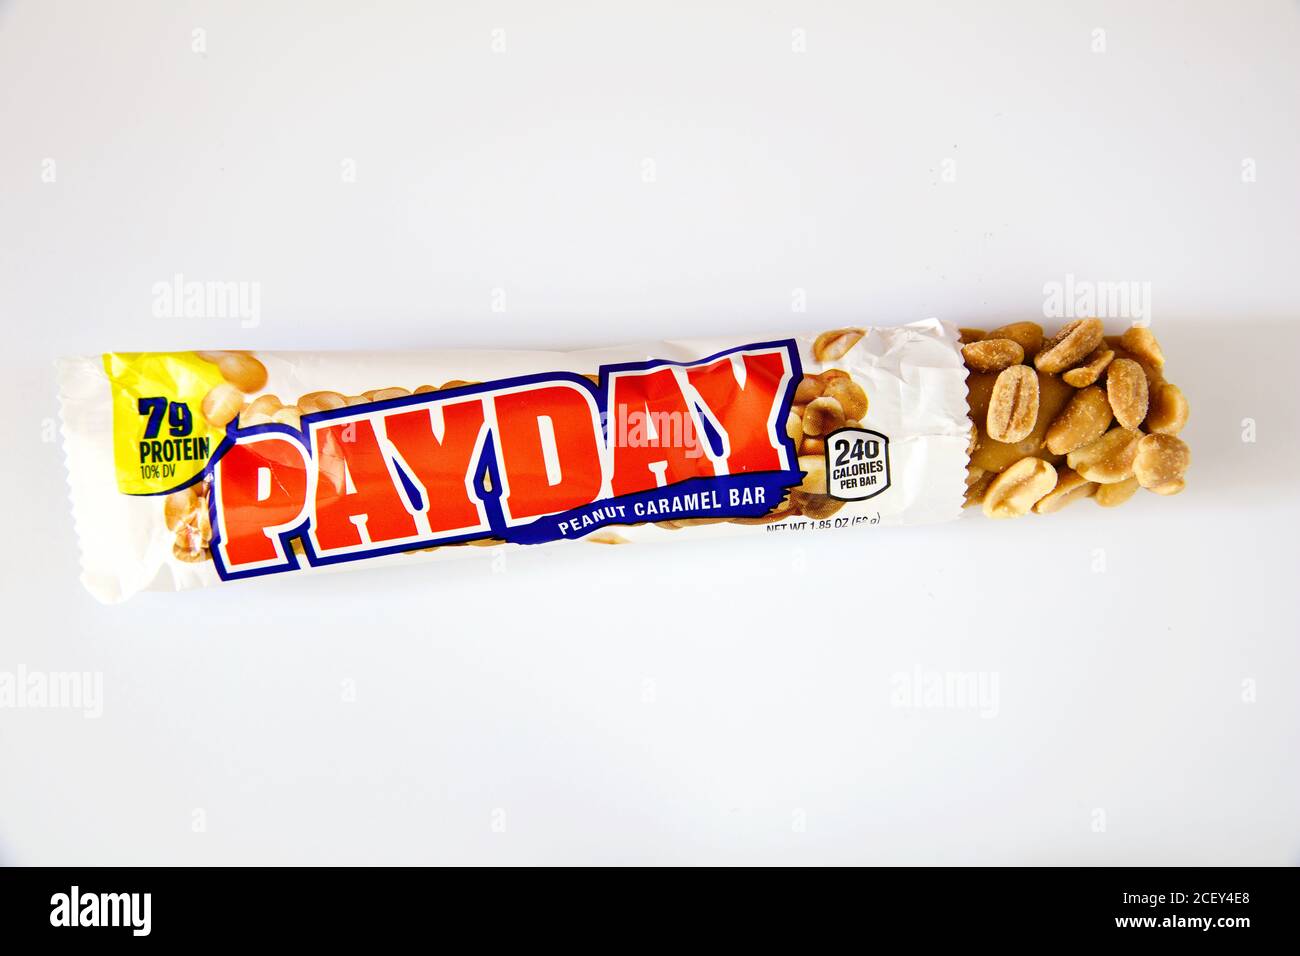 Hershey’s PAYDAY Peanut Caramel Candy Bar Stockfoto